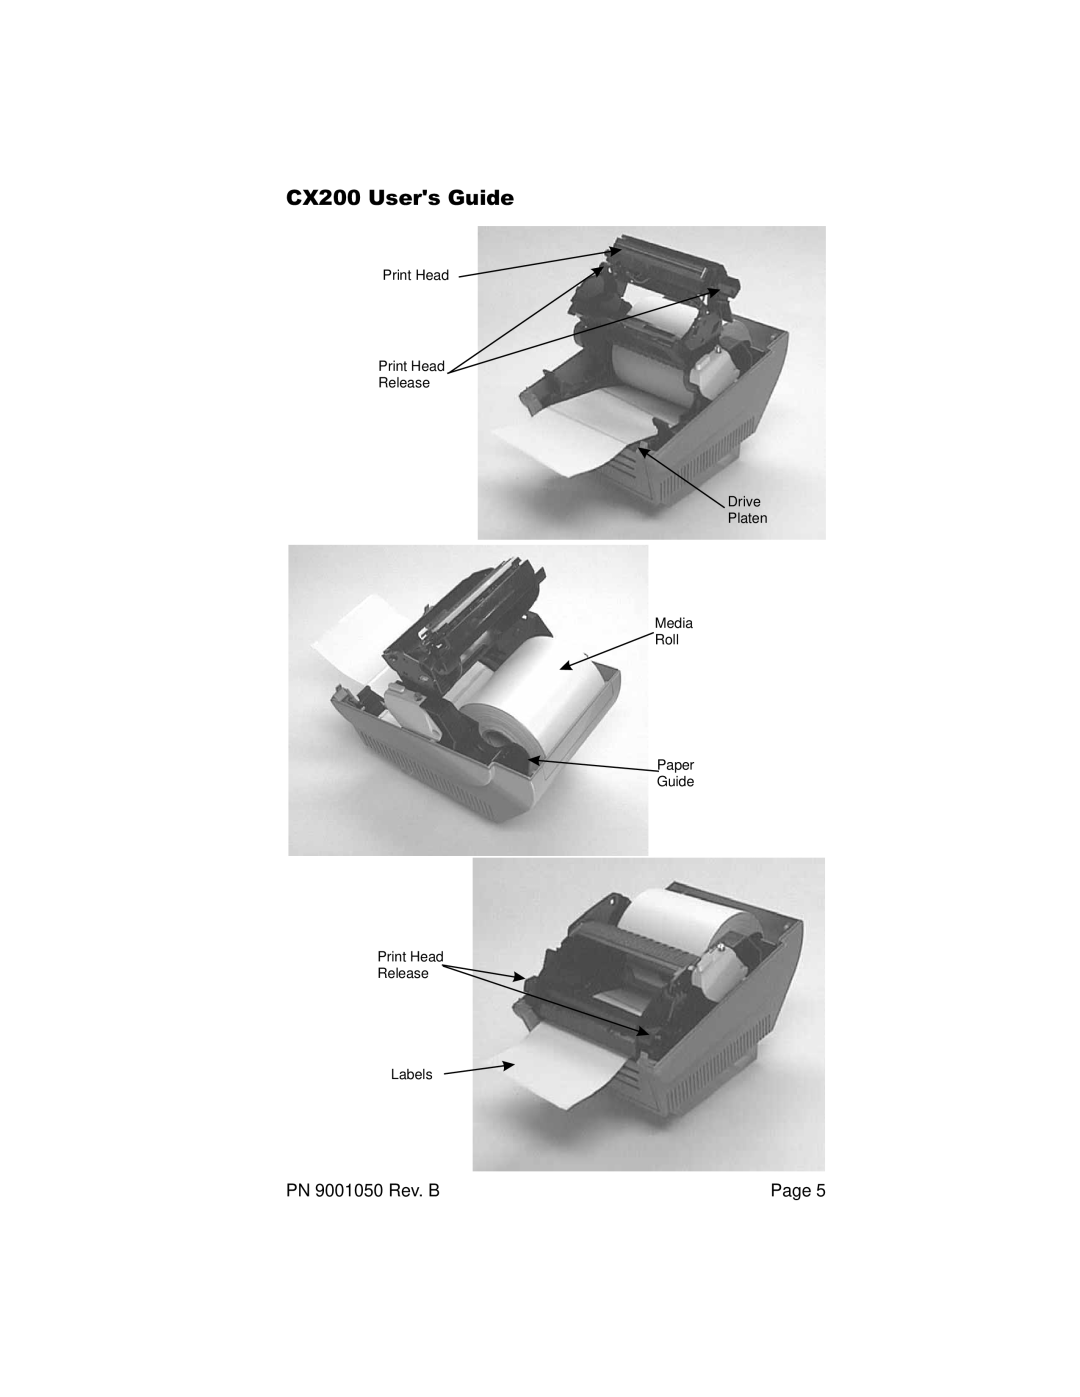 SATO CX200 Users Guide, Print Head Print Head Release Drive Platen Media Roll Paper Guide, Print Head Release Labels 